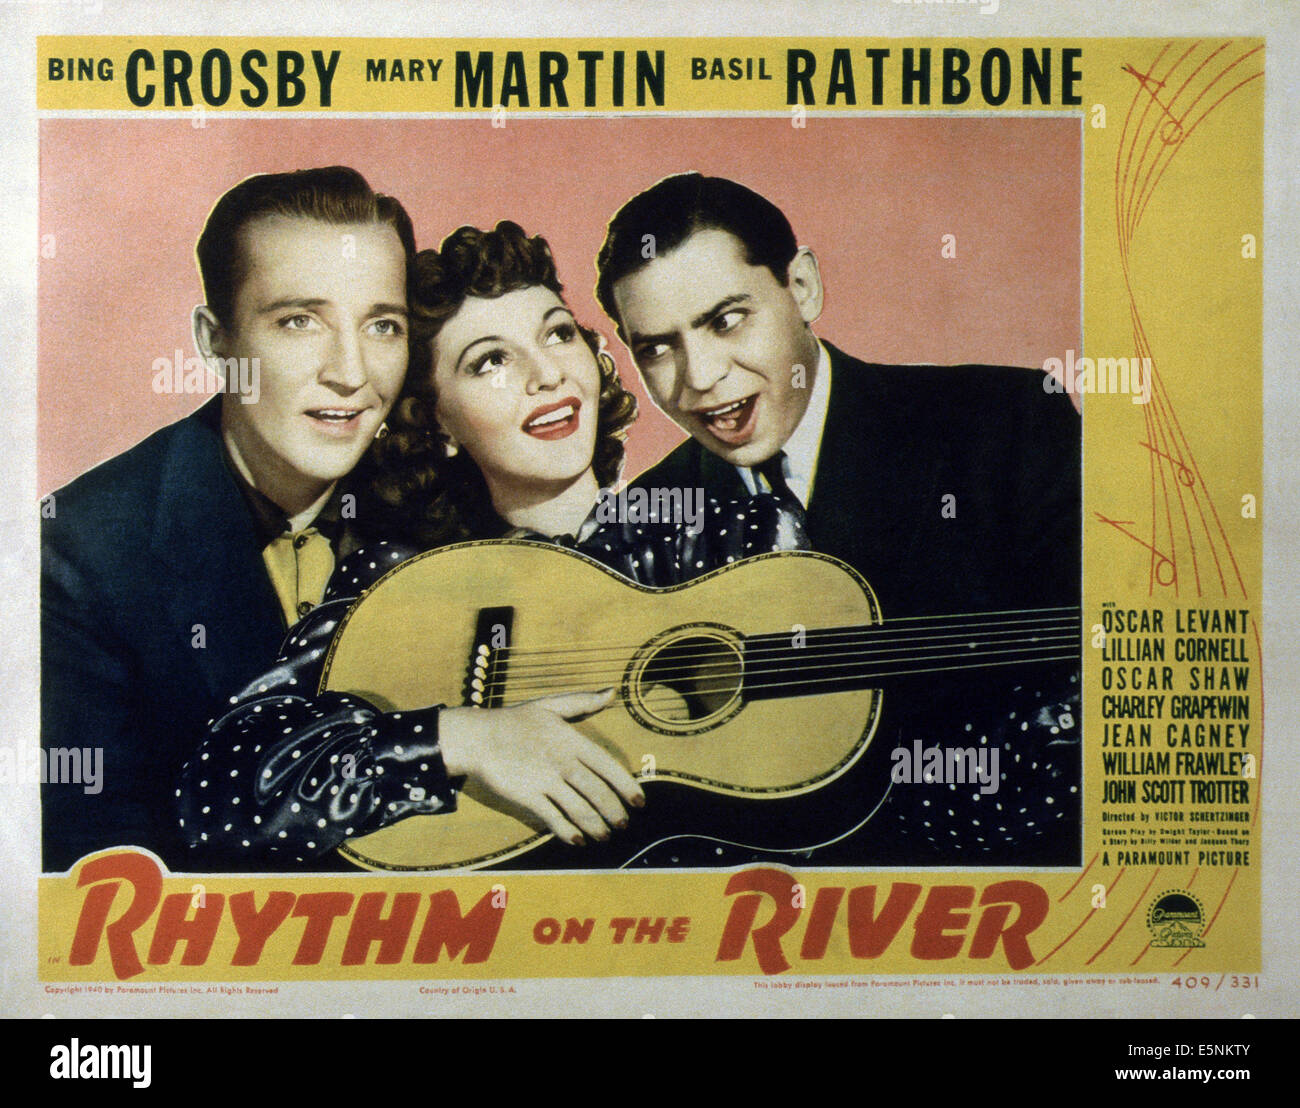 RHYTHM ON THE RIVER, US lobbycard, from left: Bing Crosby, Mary Martin, Oscar Levant, 1940 Stock Photo